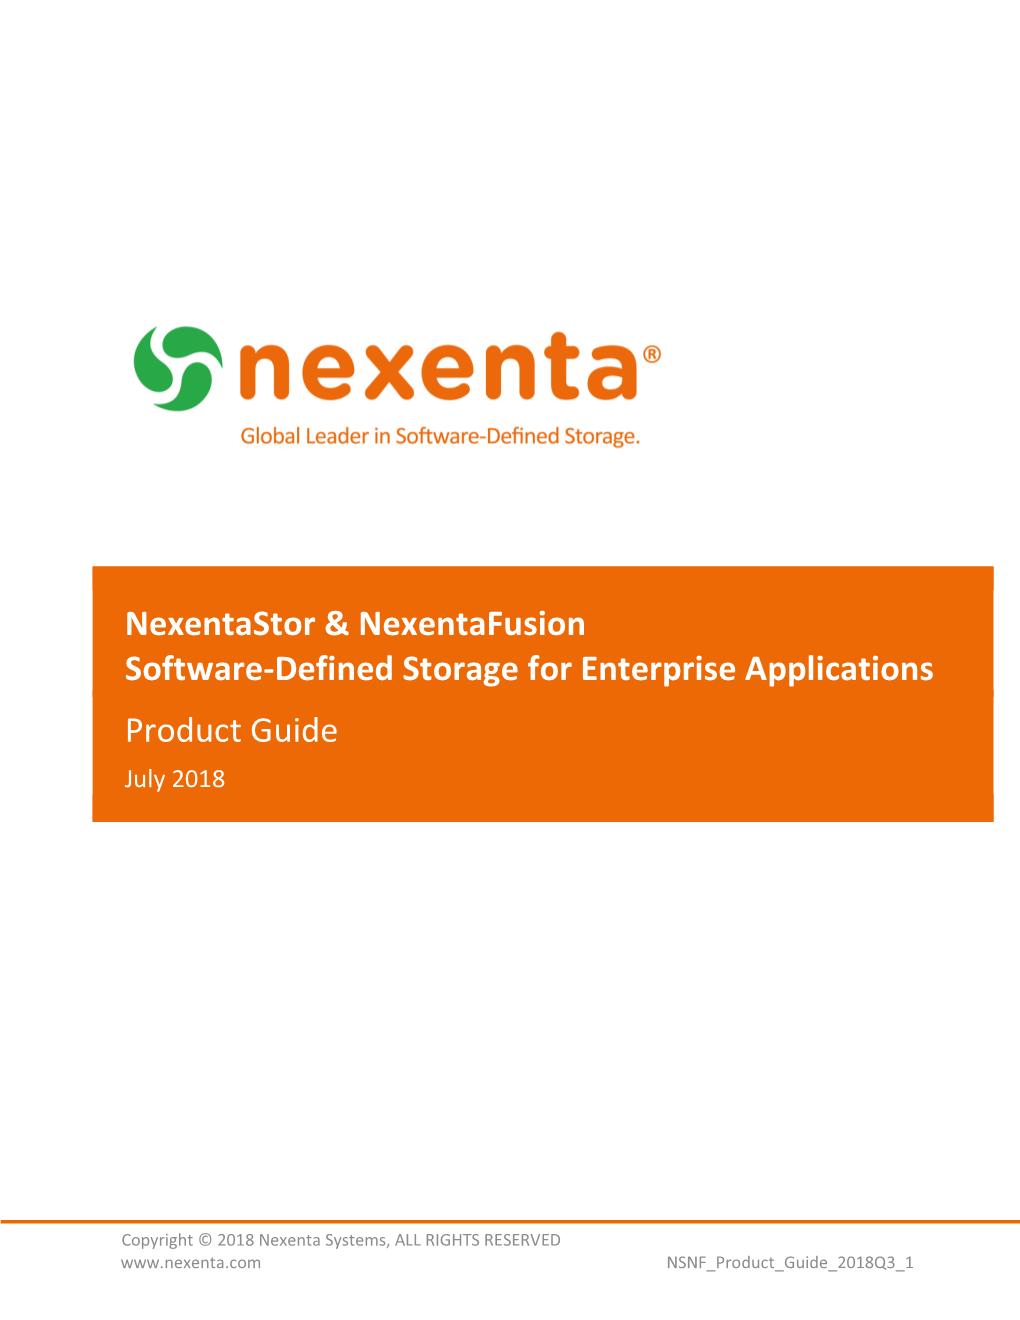 Nexentastor & Nexentafusion Software-Defined Storage For